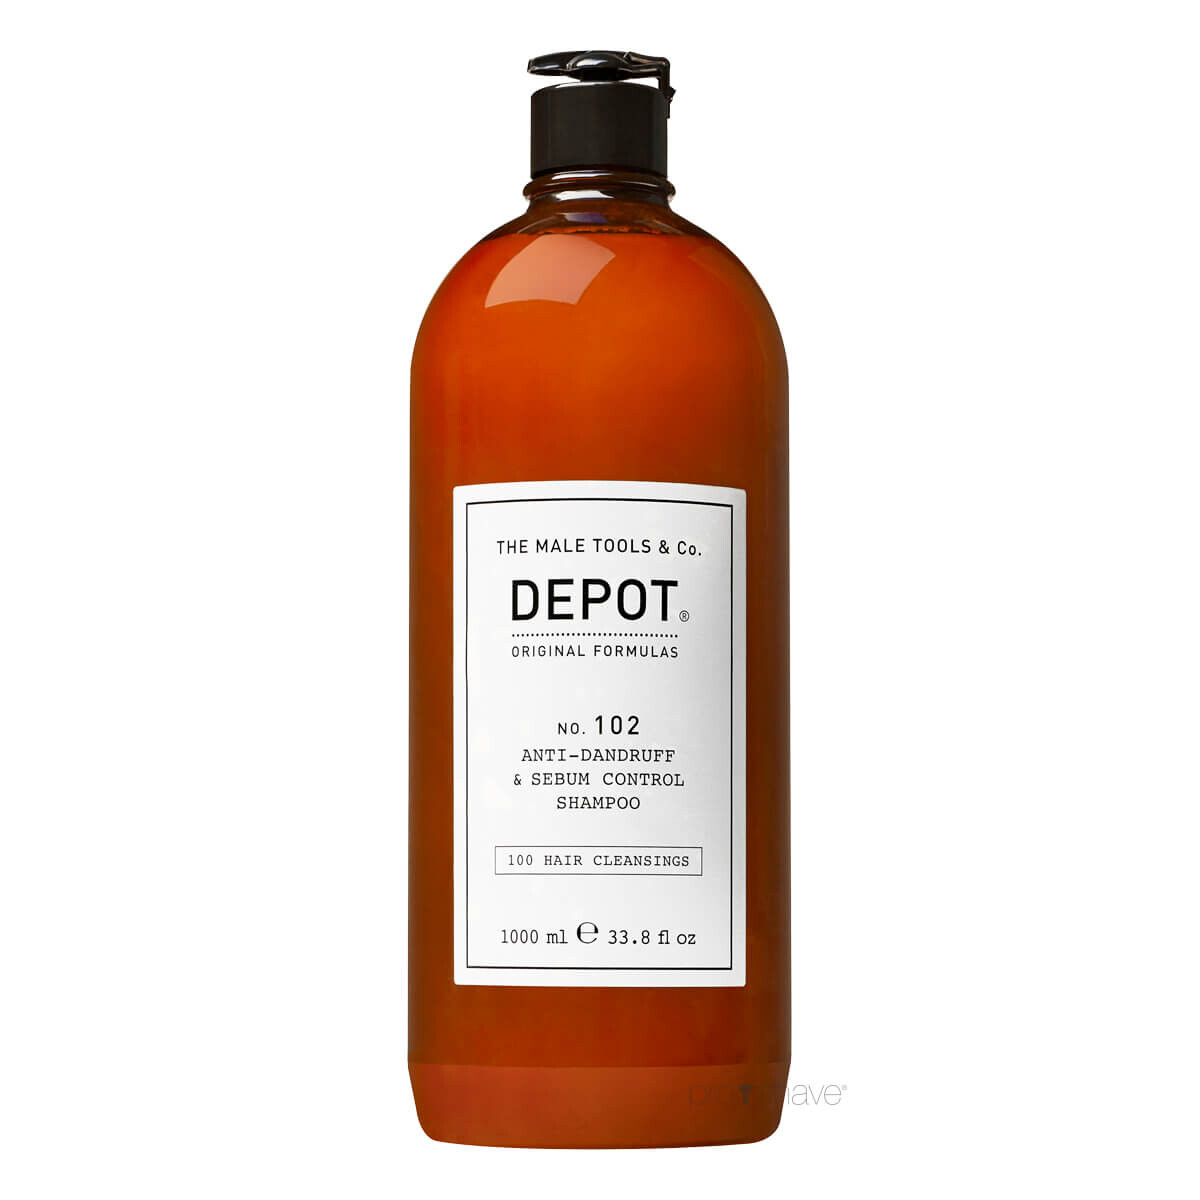 Billede af Depot Anti-Dandruff & Sebum Control Shampoo, No. 102, 1000 ml.